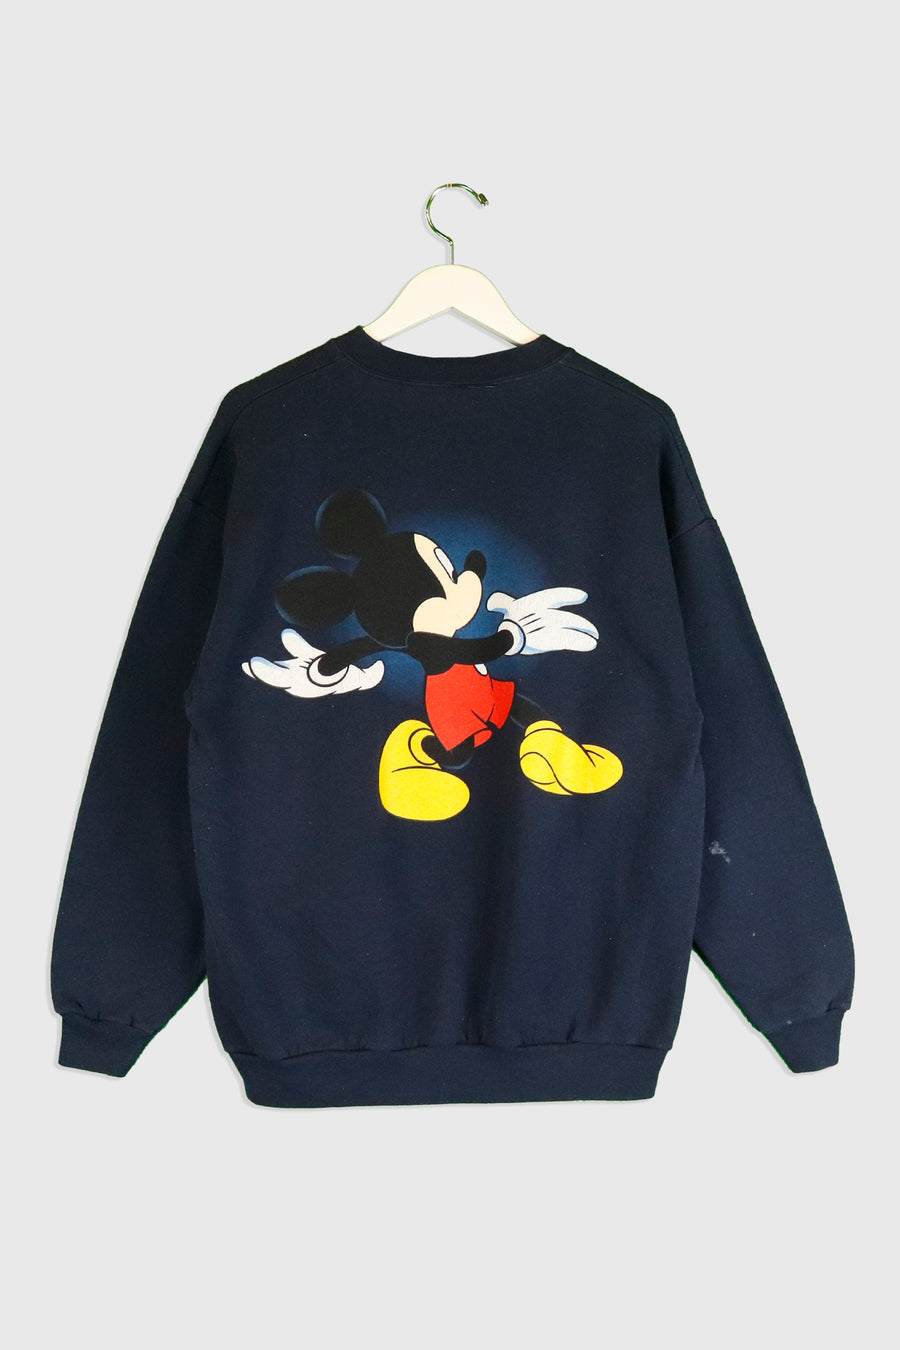 Vintage Disney Florida Mickey Looking Sneaky Sweatshirt Sz L